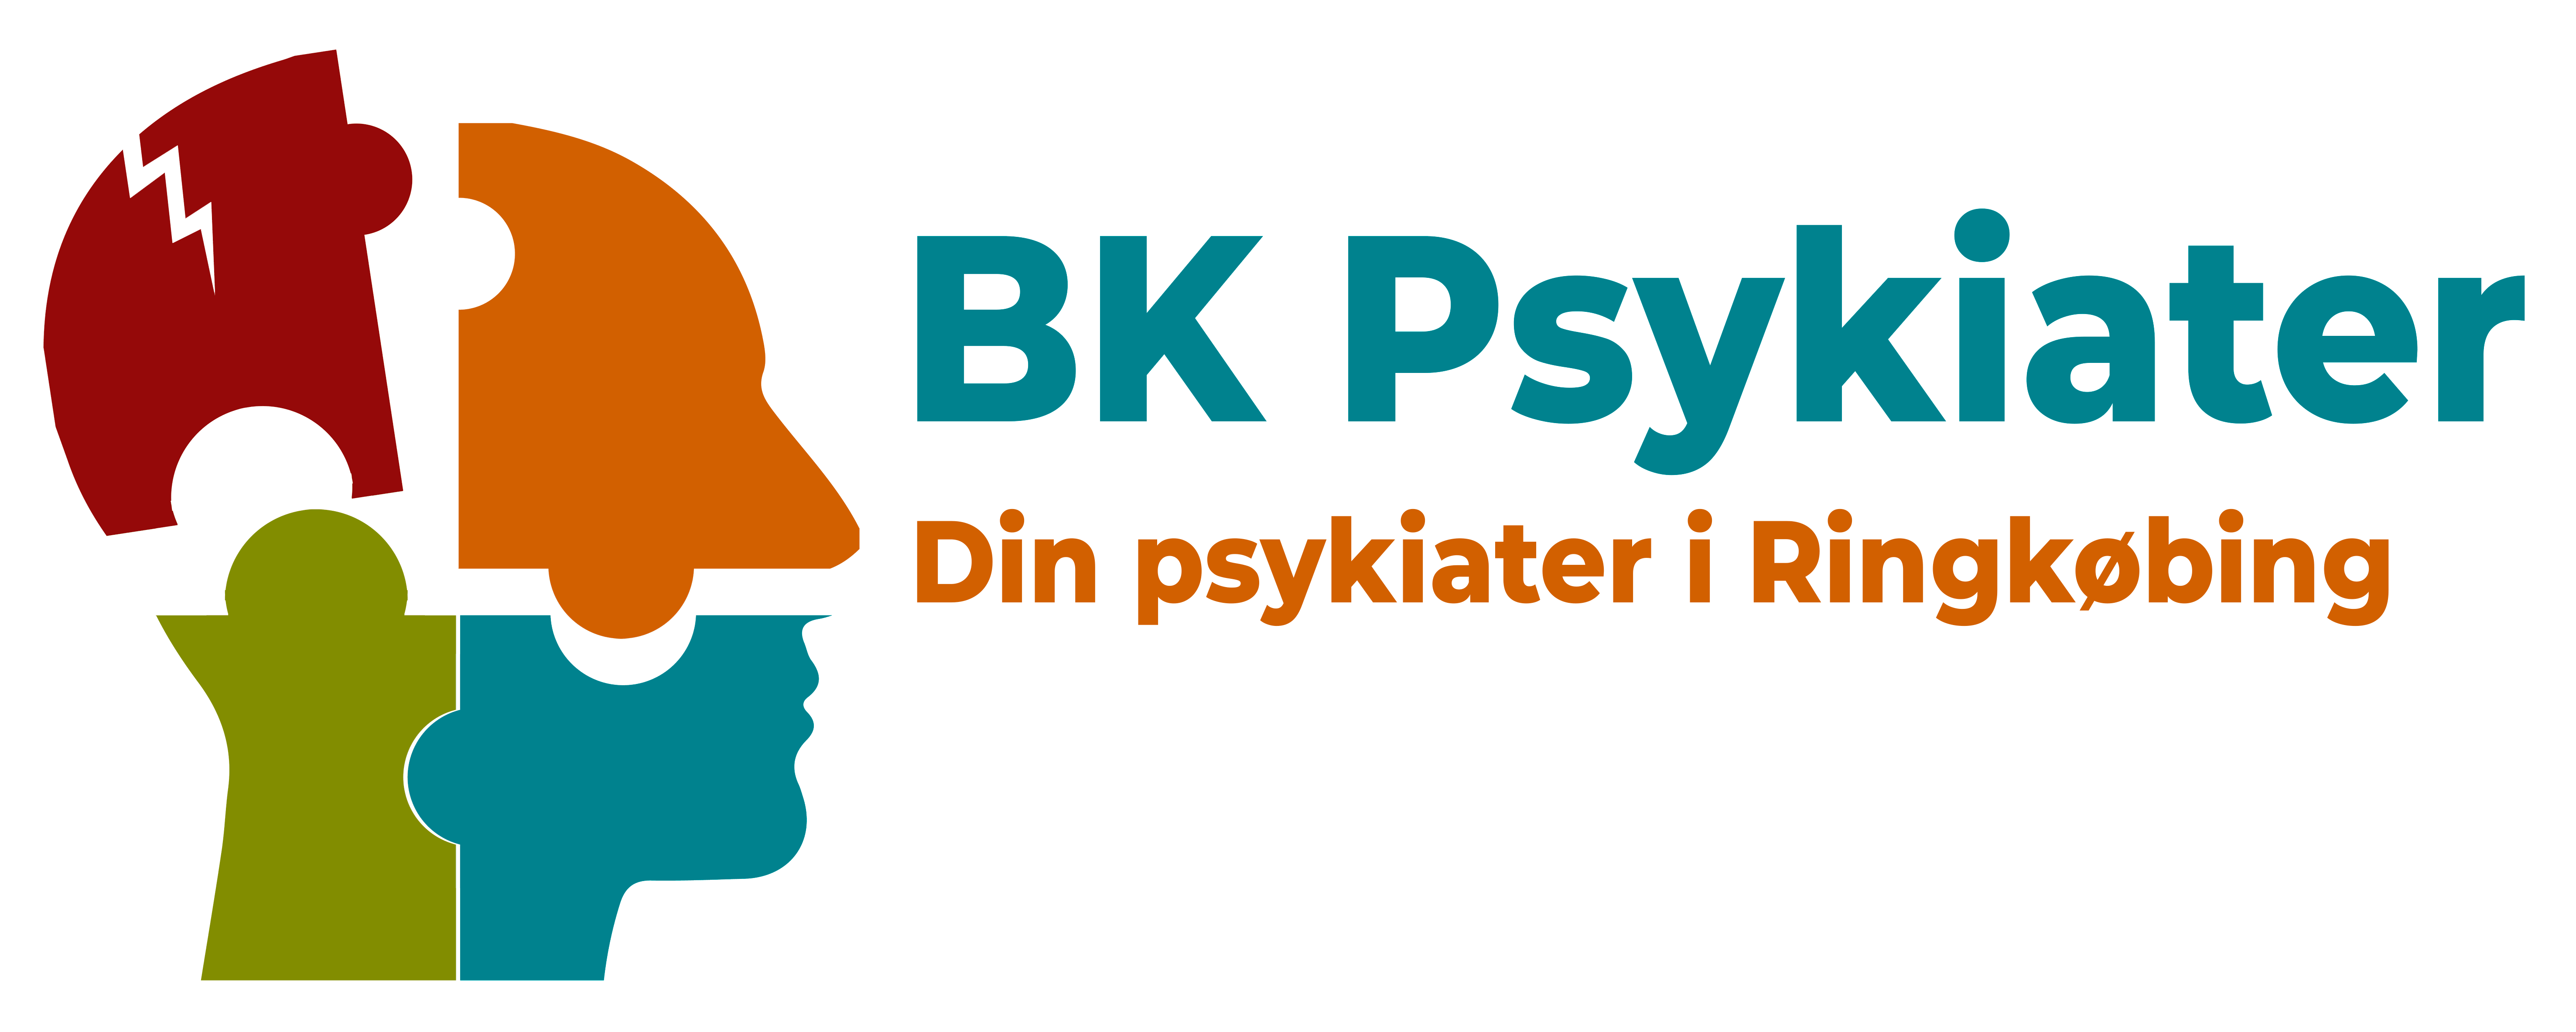 BK Psykiater